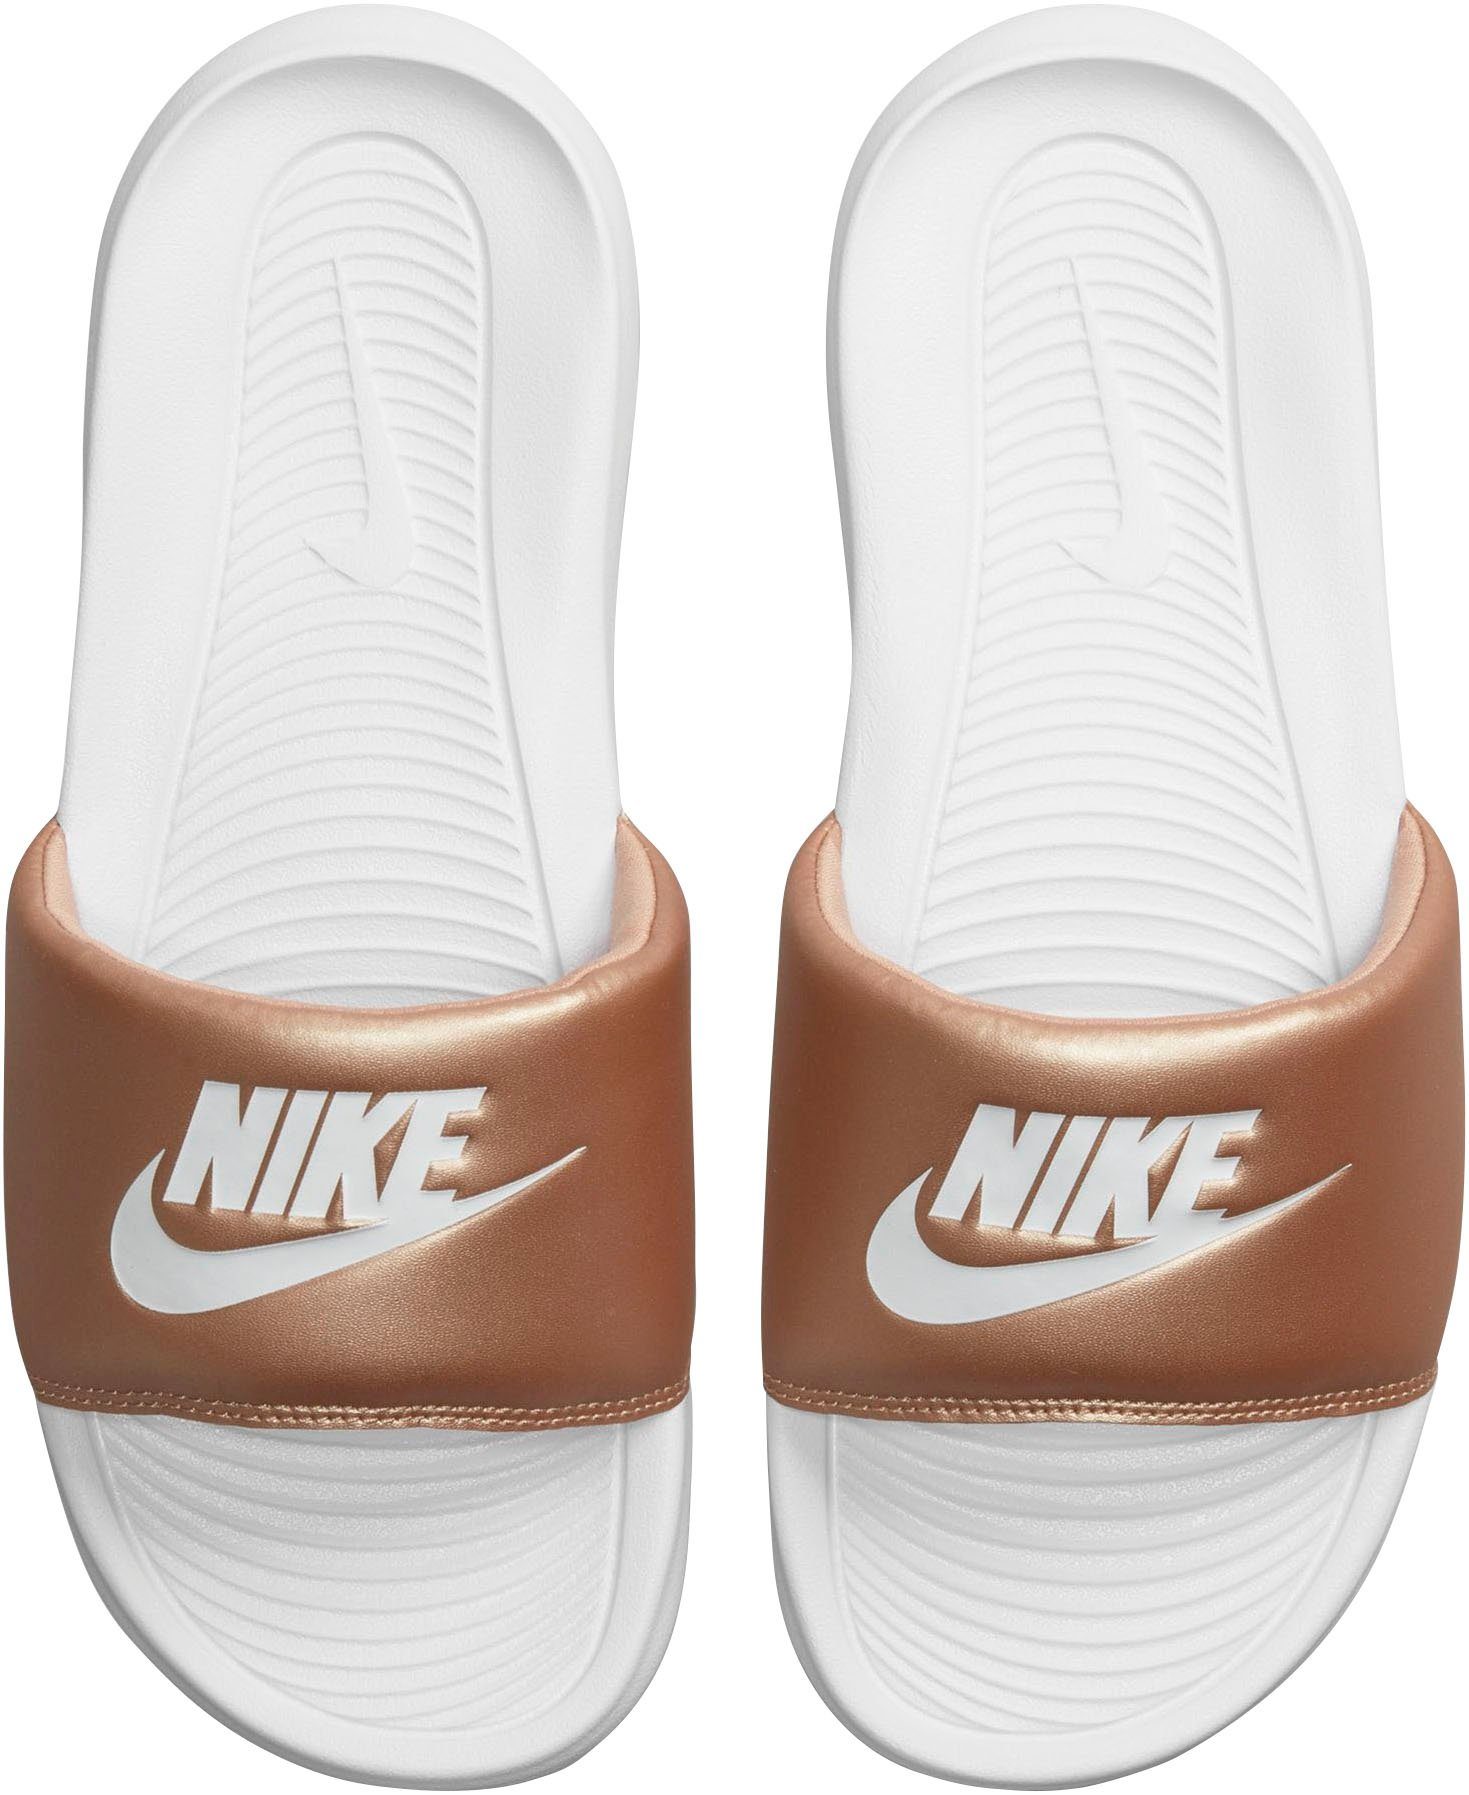 Nike Sportswear »VICTORI ONE« Badesandale kaufen | OTTO